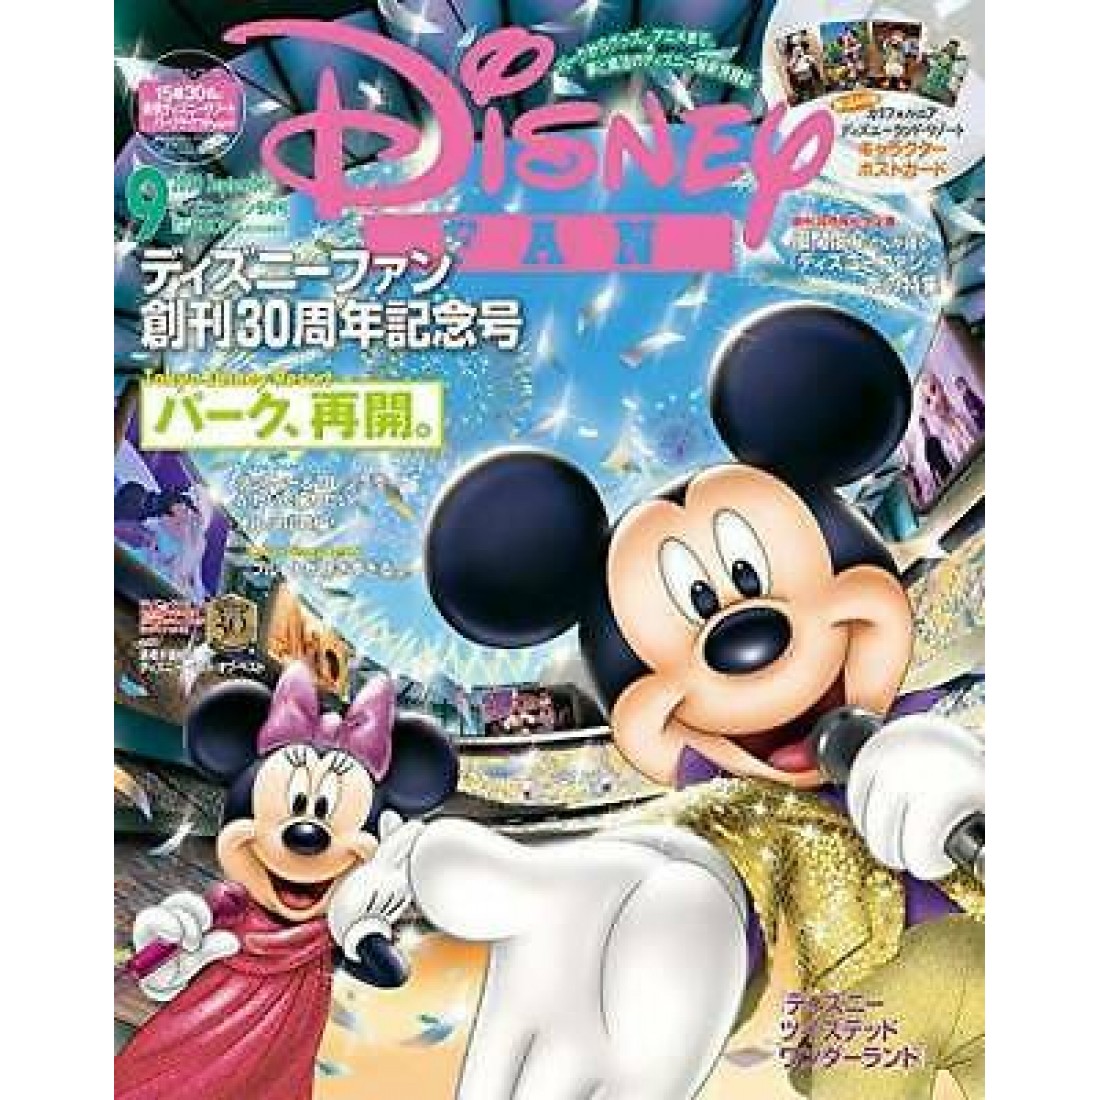 Disney Fan (Japan) Magazine Subscriber Services